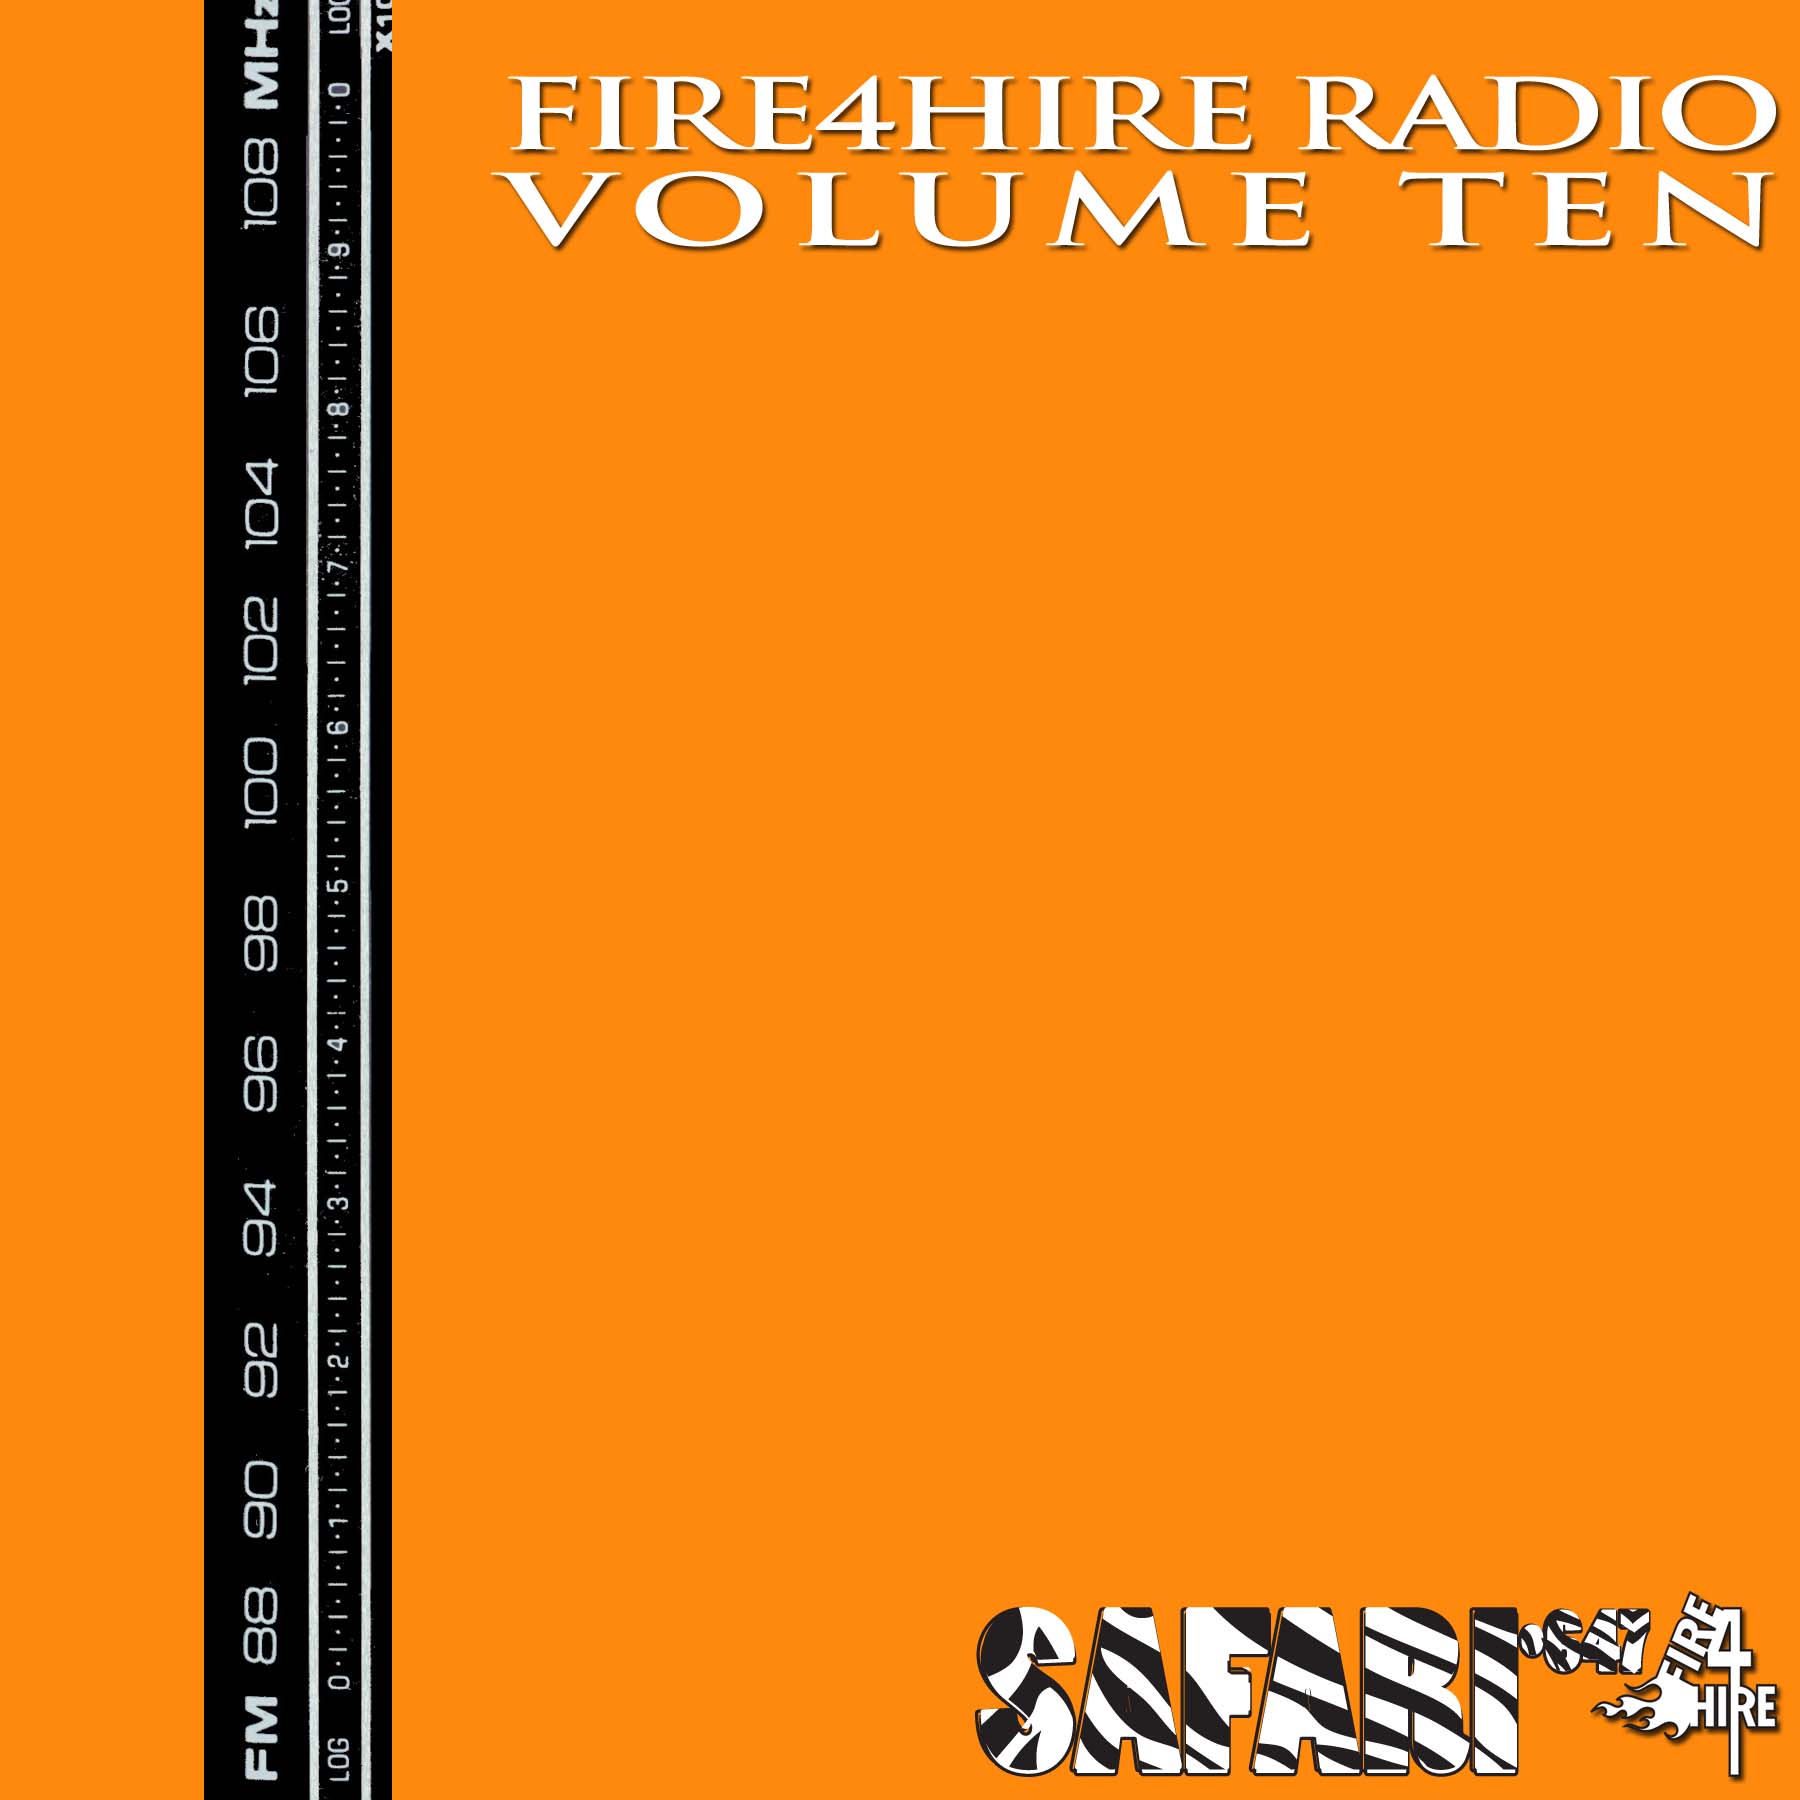 Fire 4 Hire Radio vol. 10 mixed by Safari647